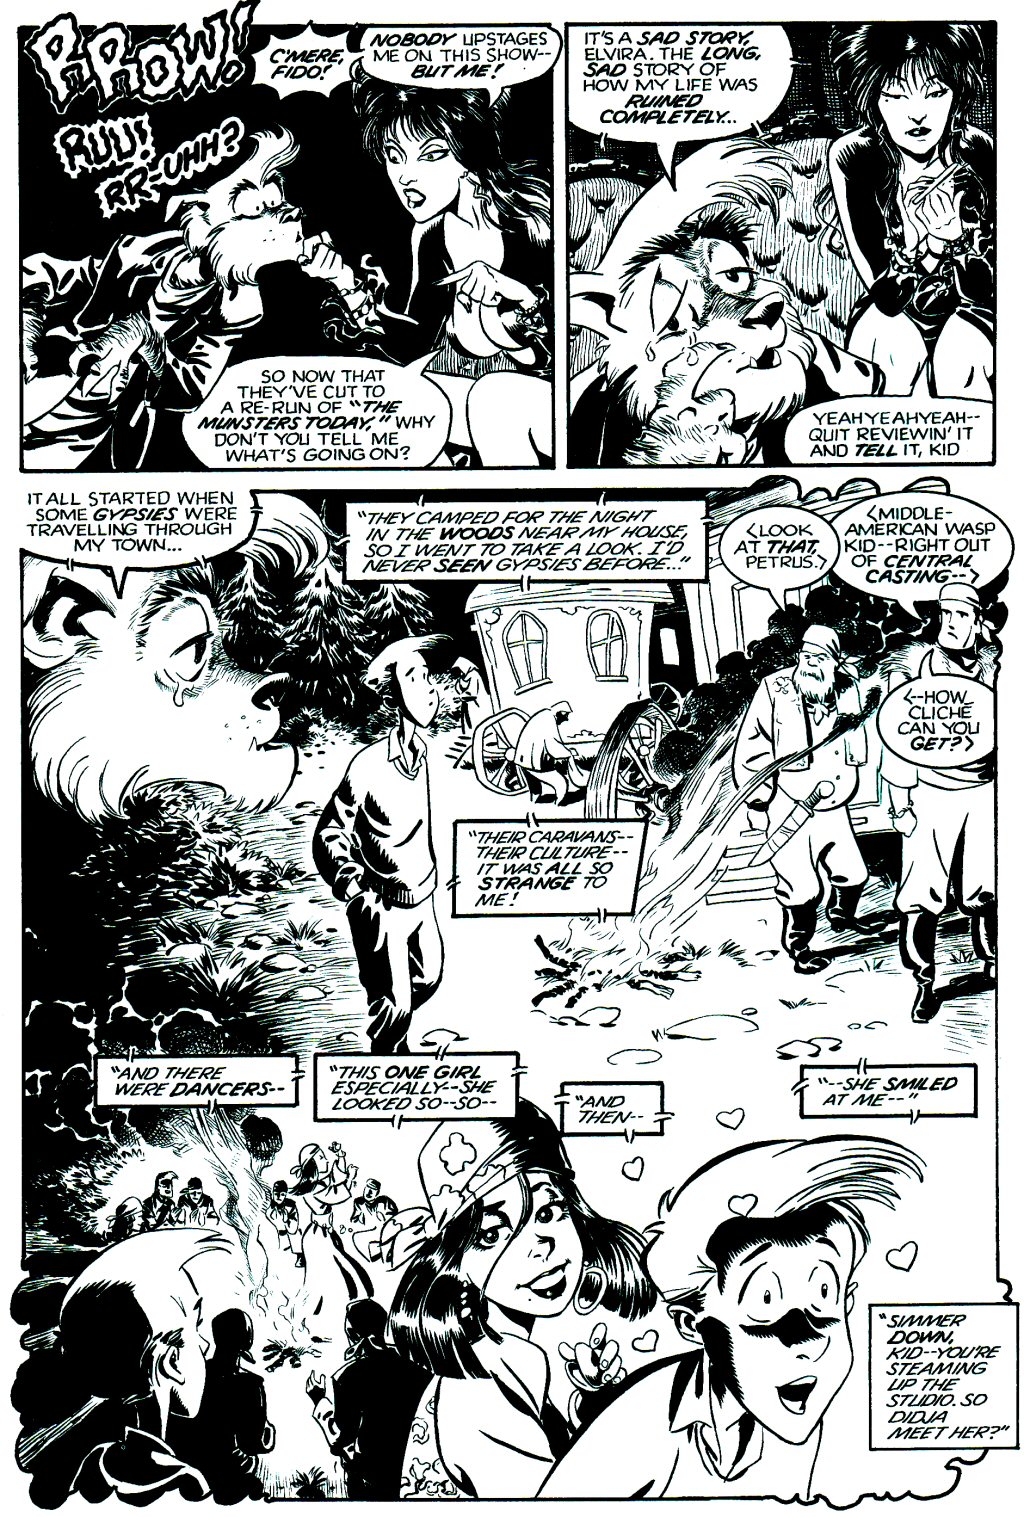 Elvira, Mistress of the Dark (1993) issue 2 - Page 6